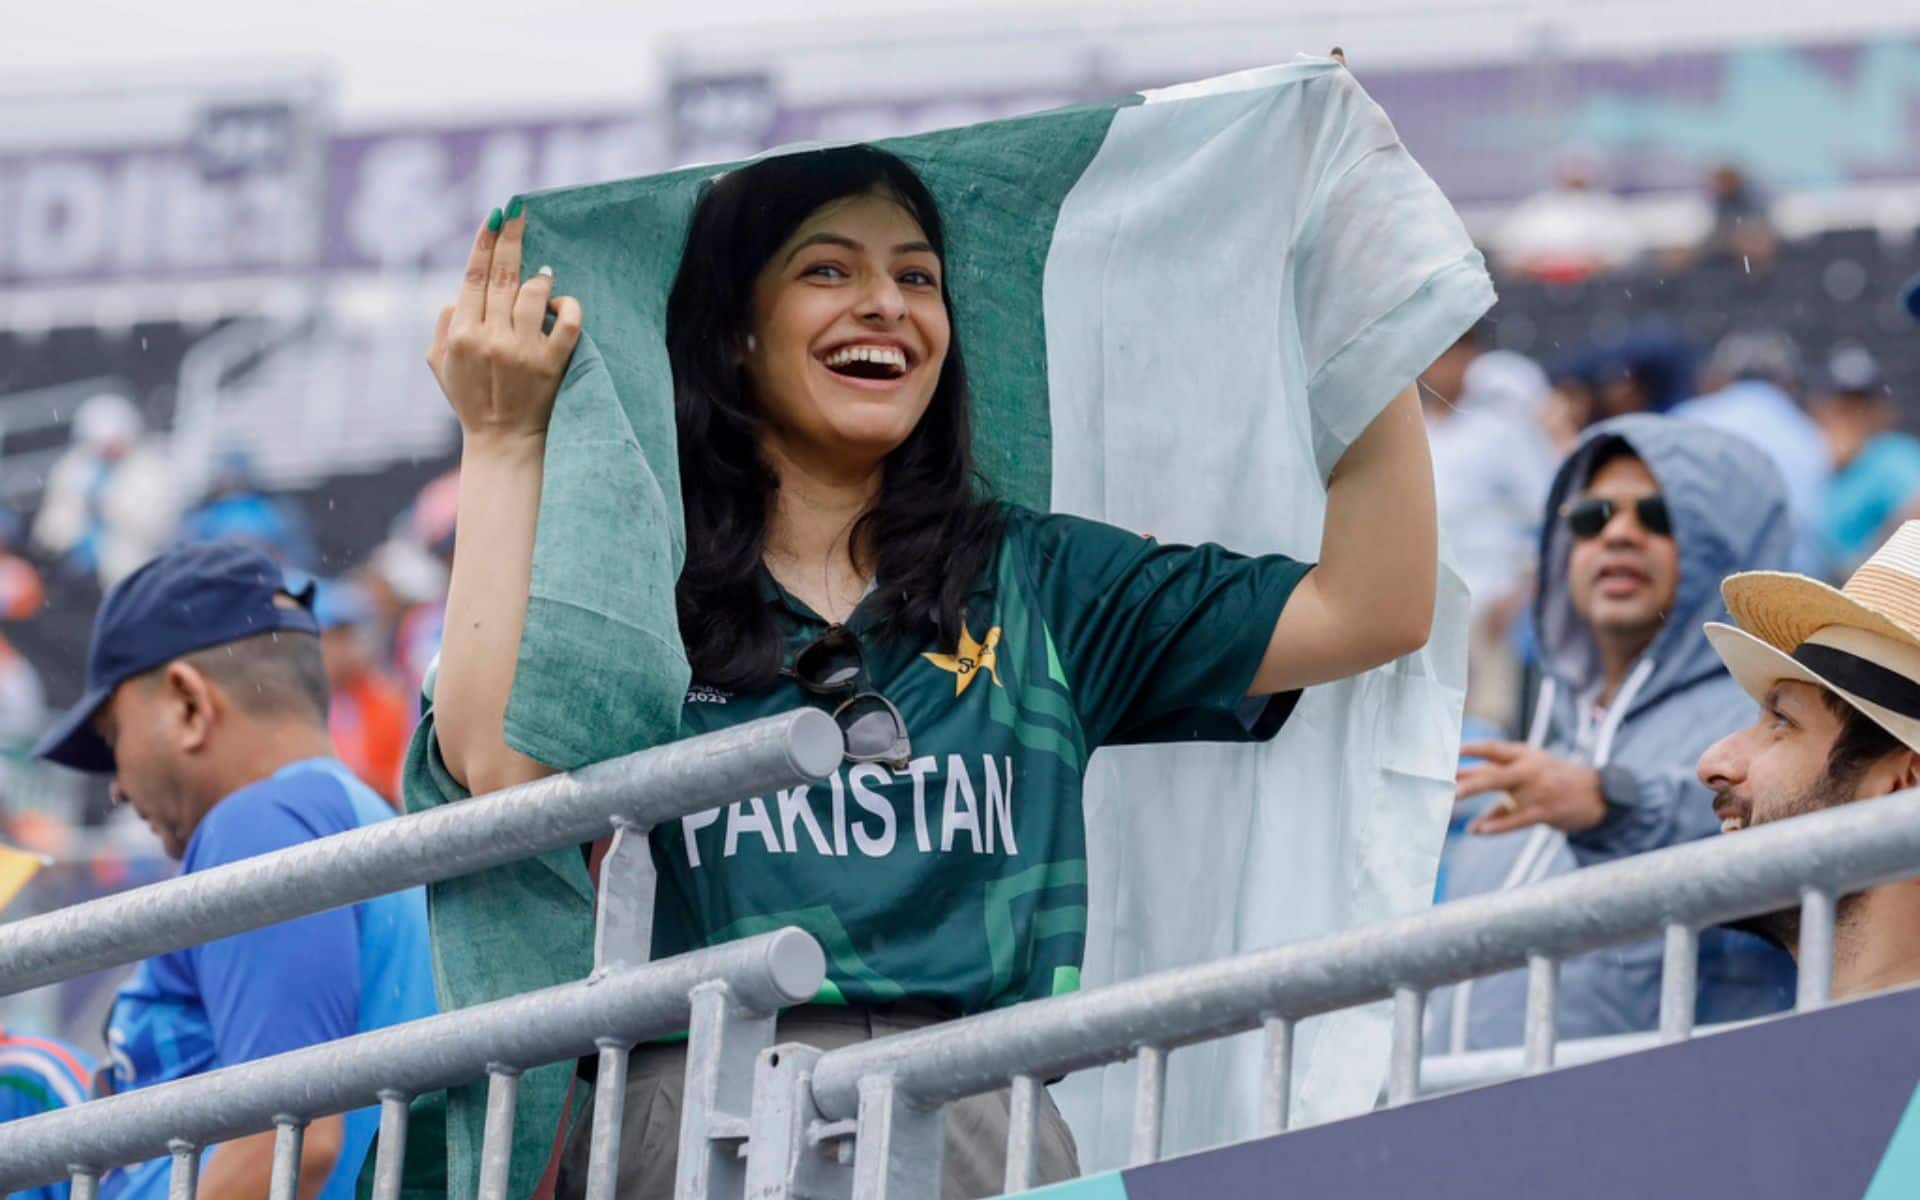 Pakistan fangirl in New York for IND vs PAK (AP)